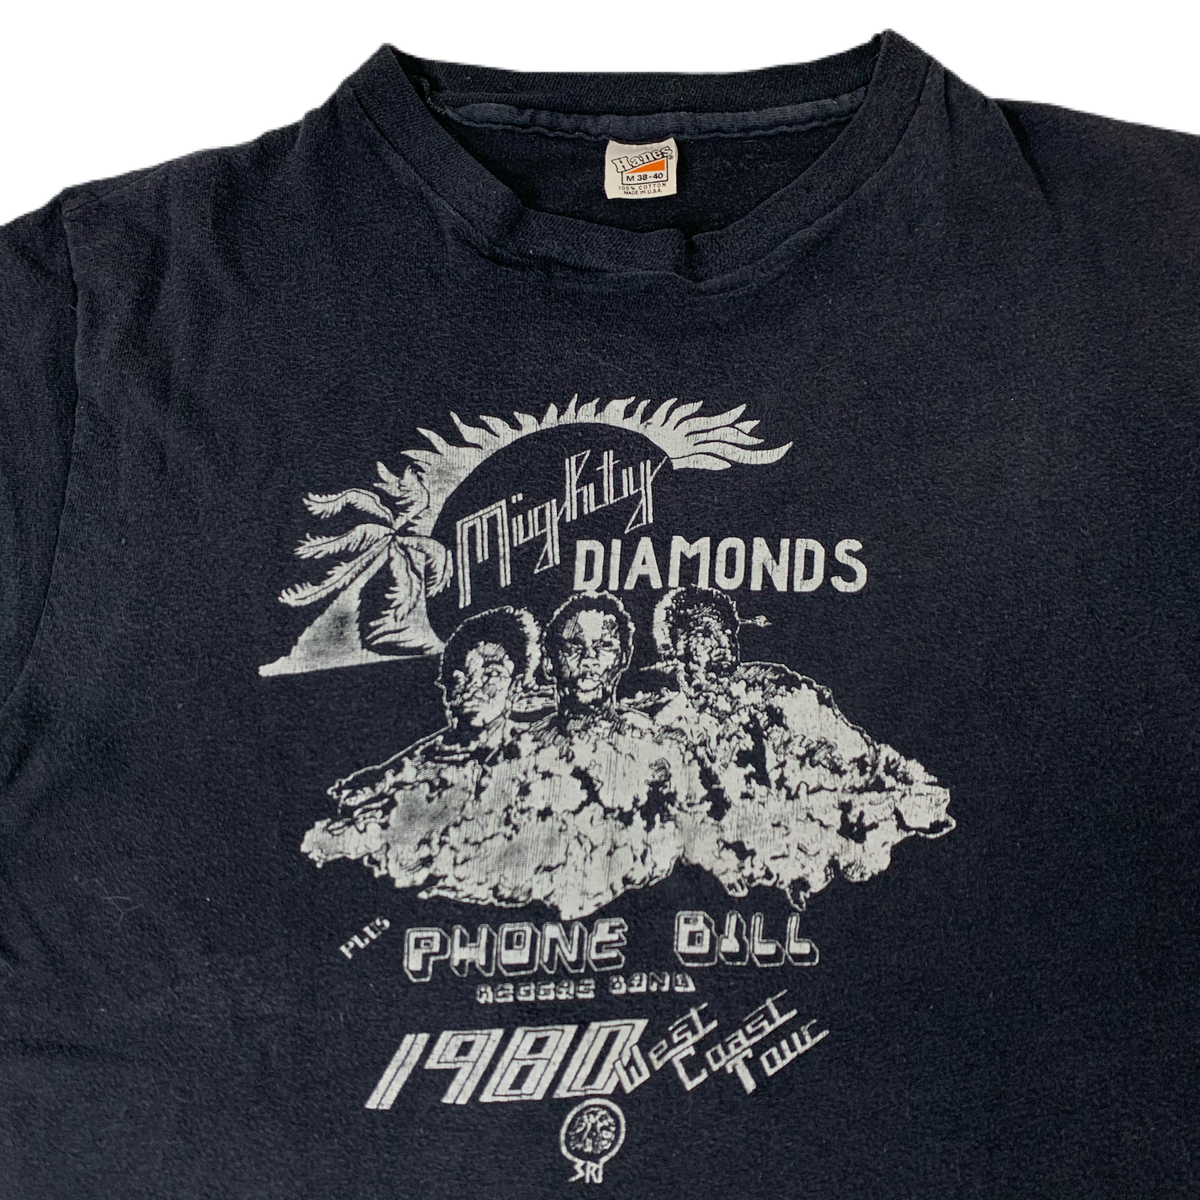 Vintage Mighty Diamonds Phone Bill “West Coast” T-Shirt